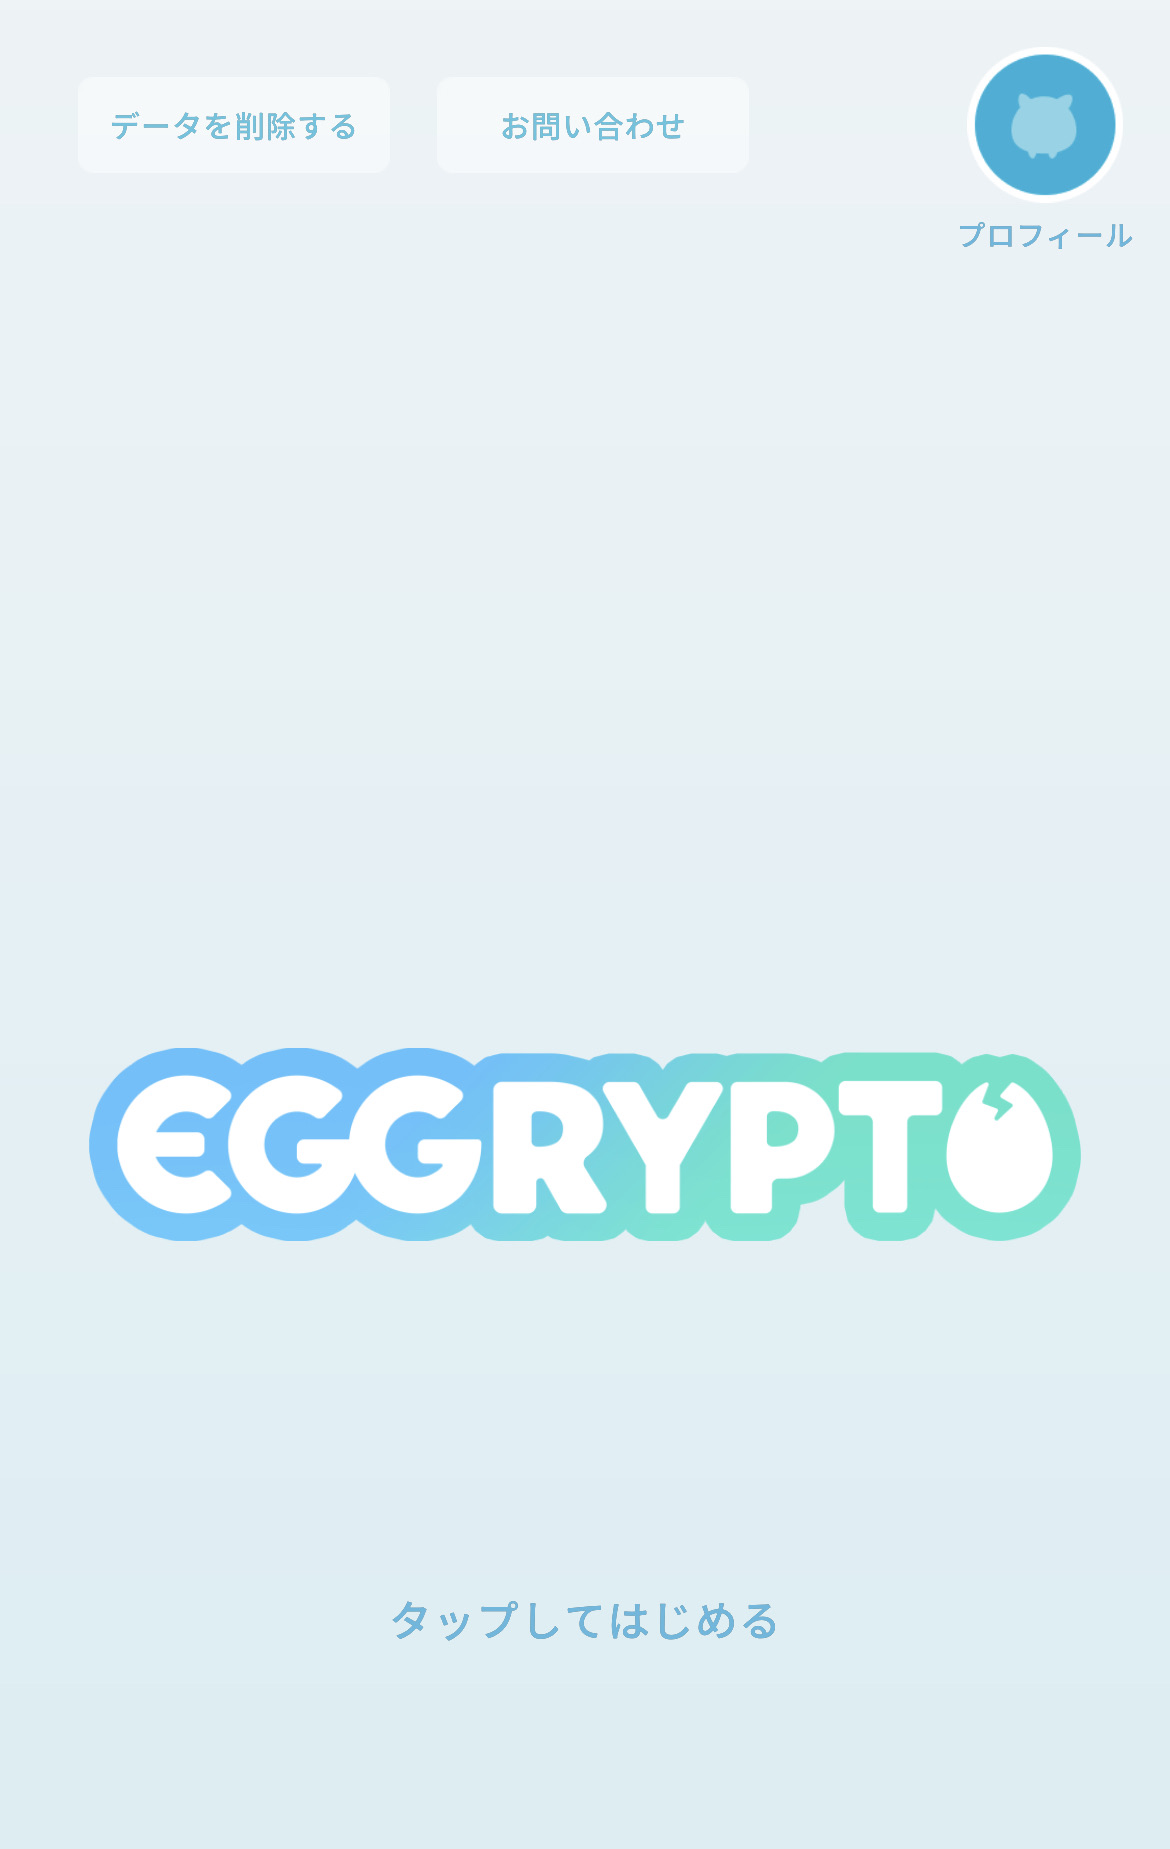 Eggrypto（エグリプト）